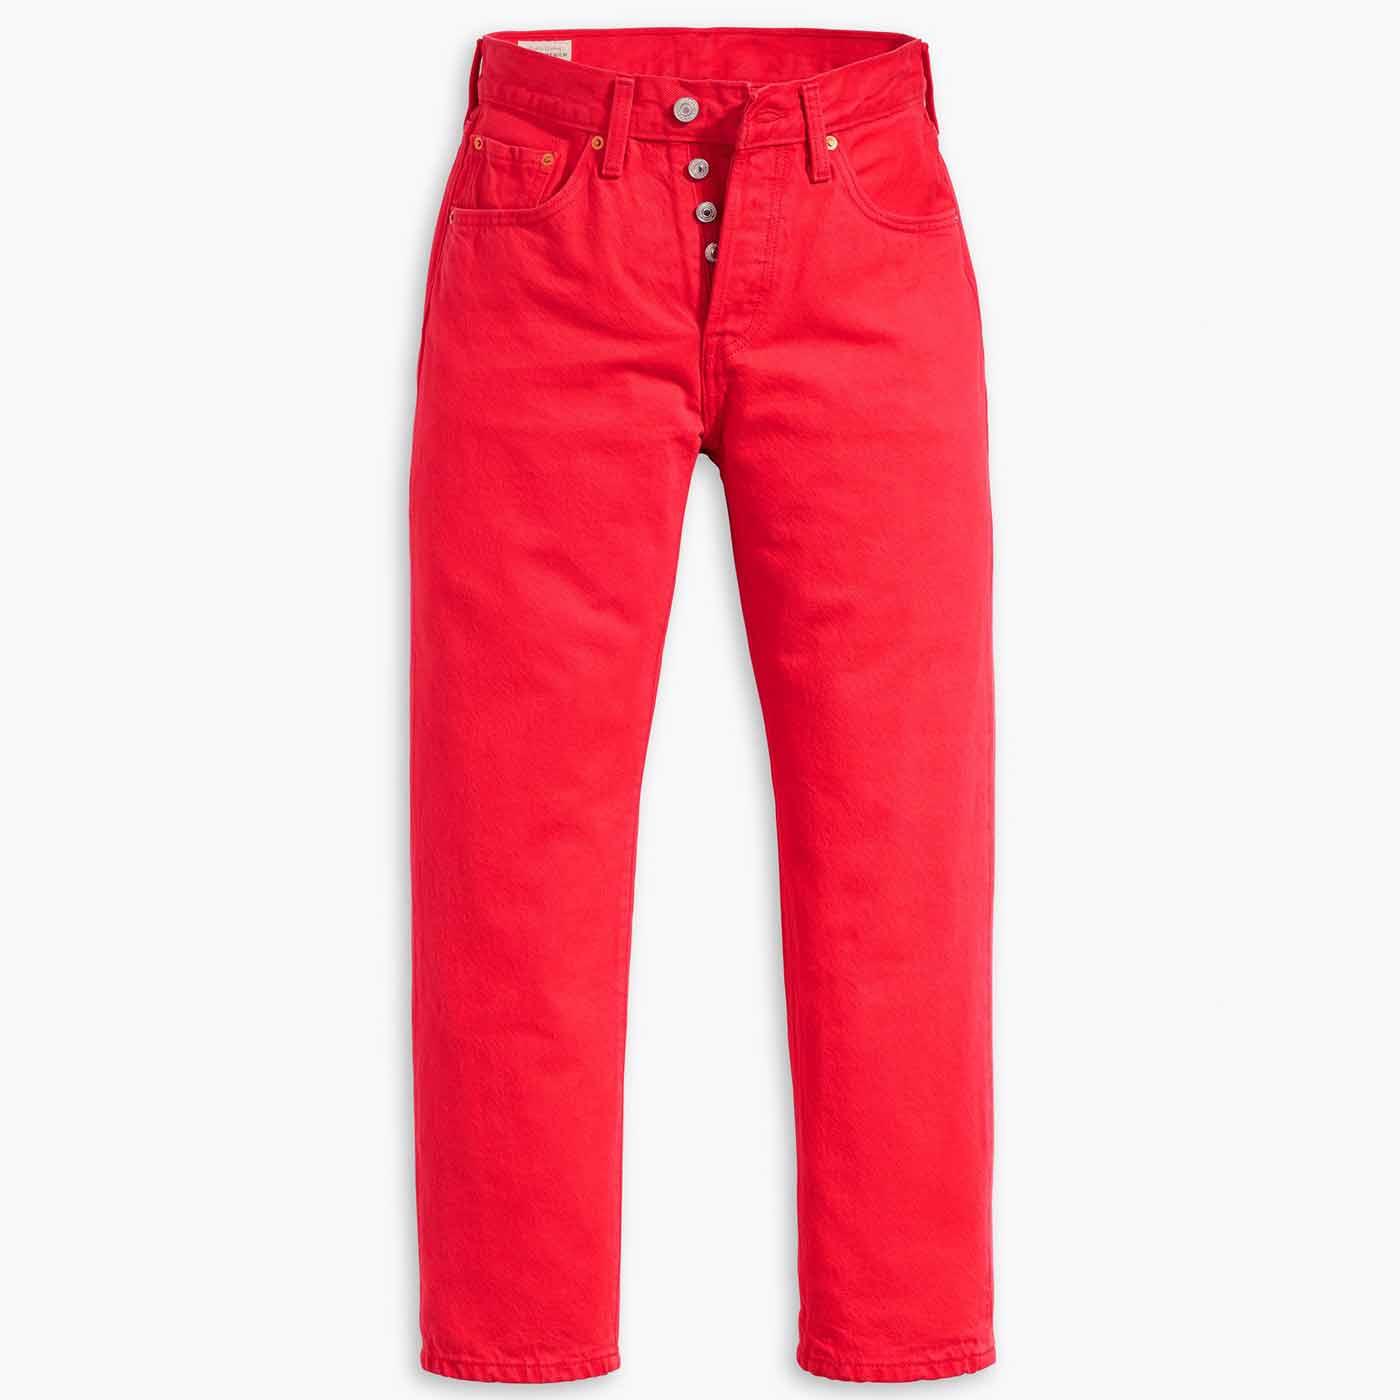 LEVI'S® Women's 501® Original Red Cropped Jeans SR